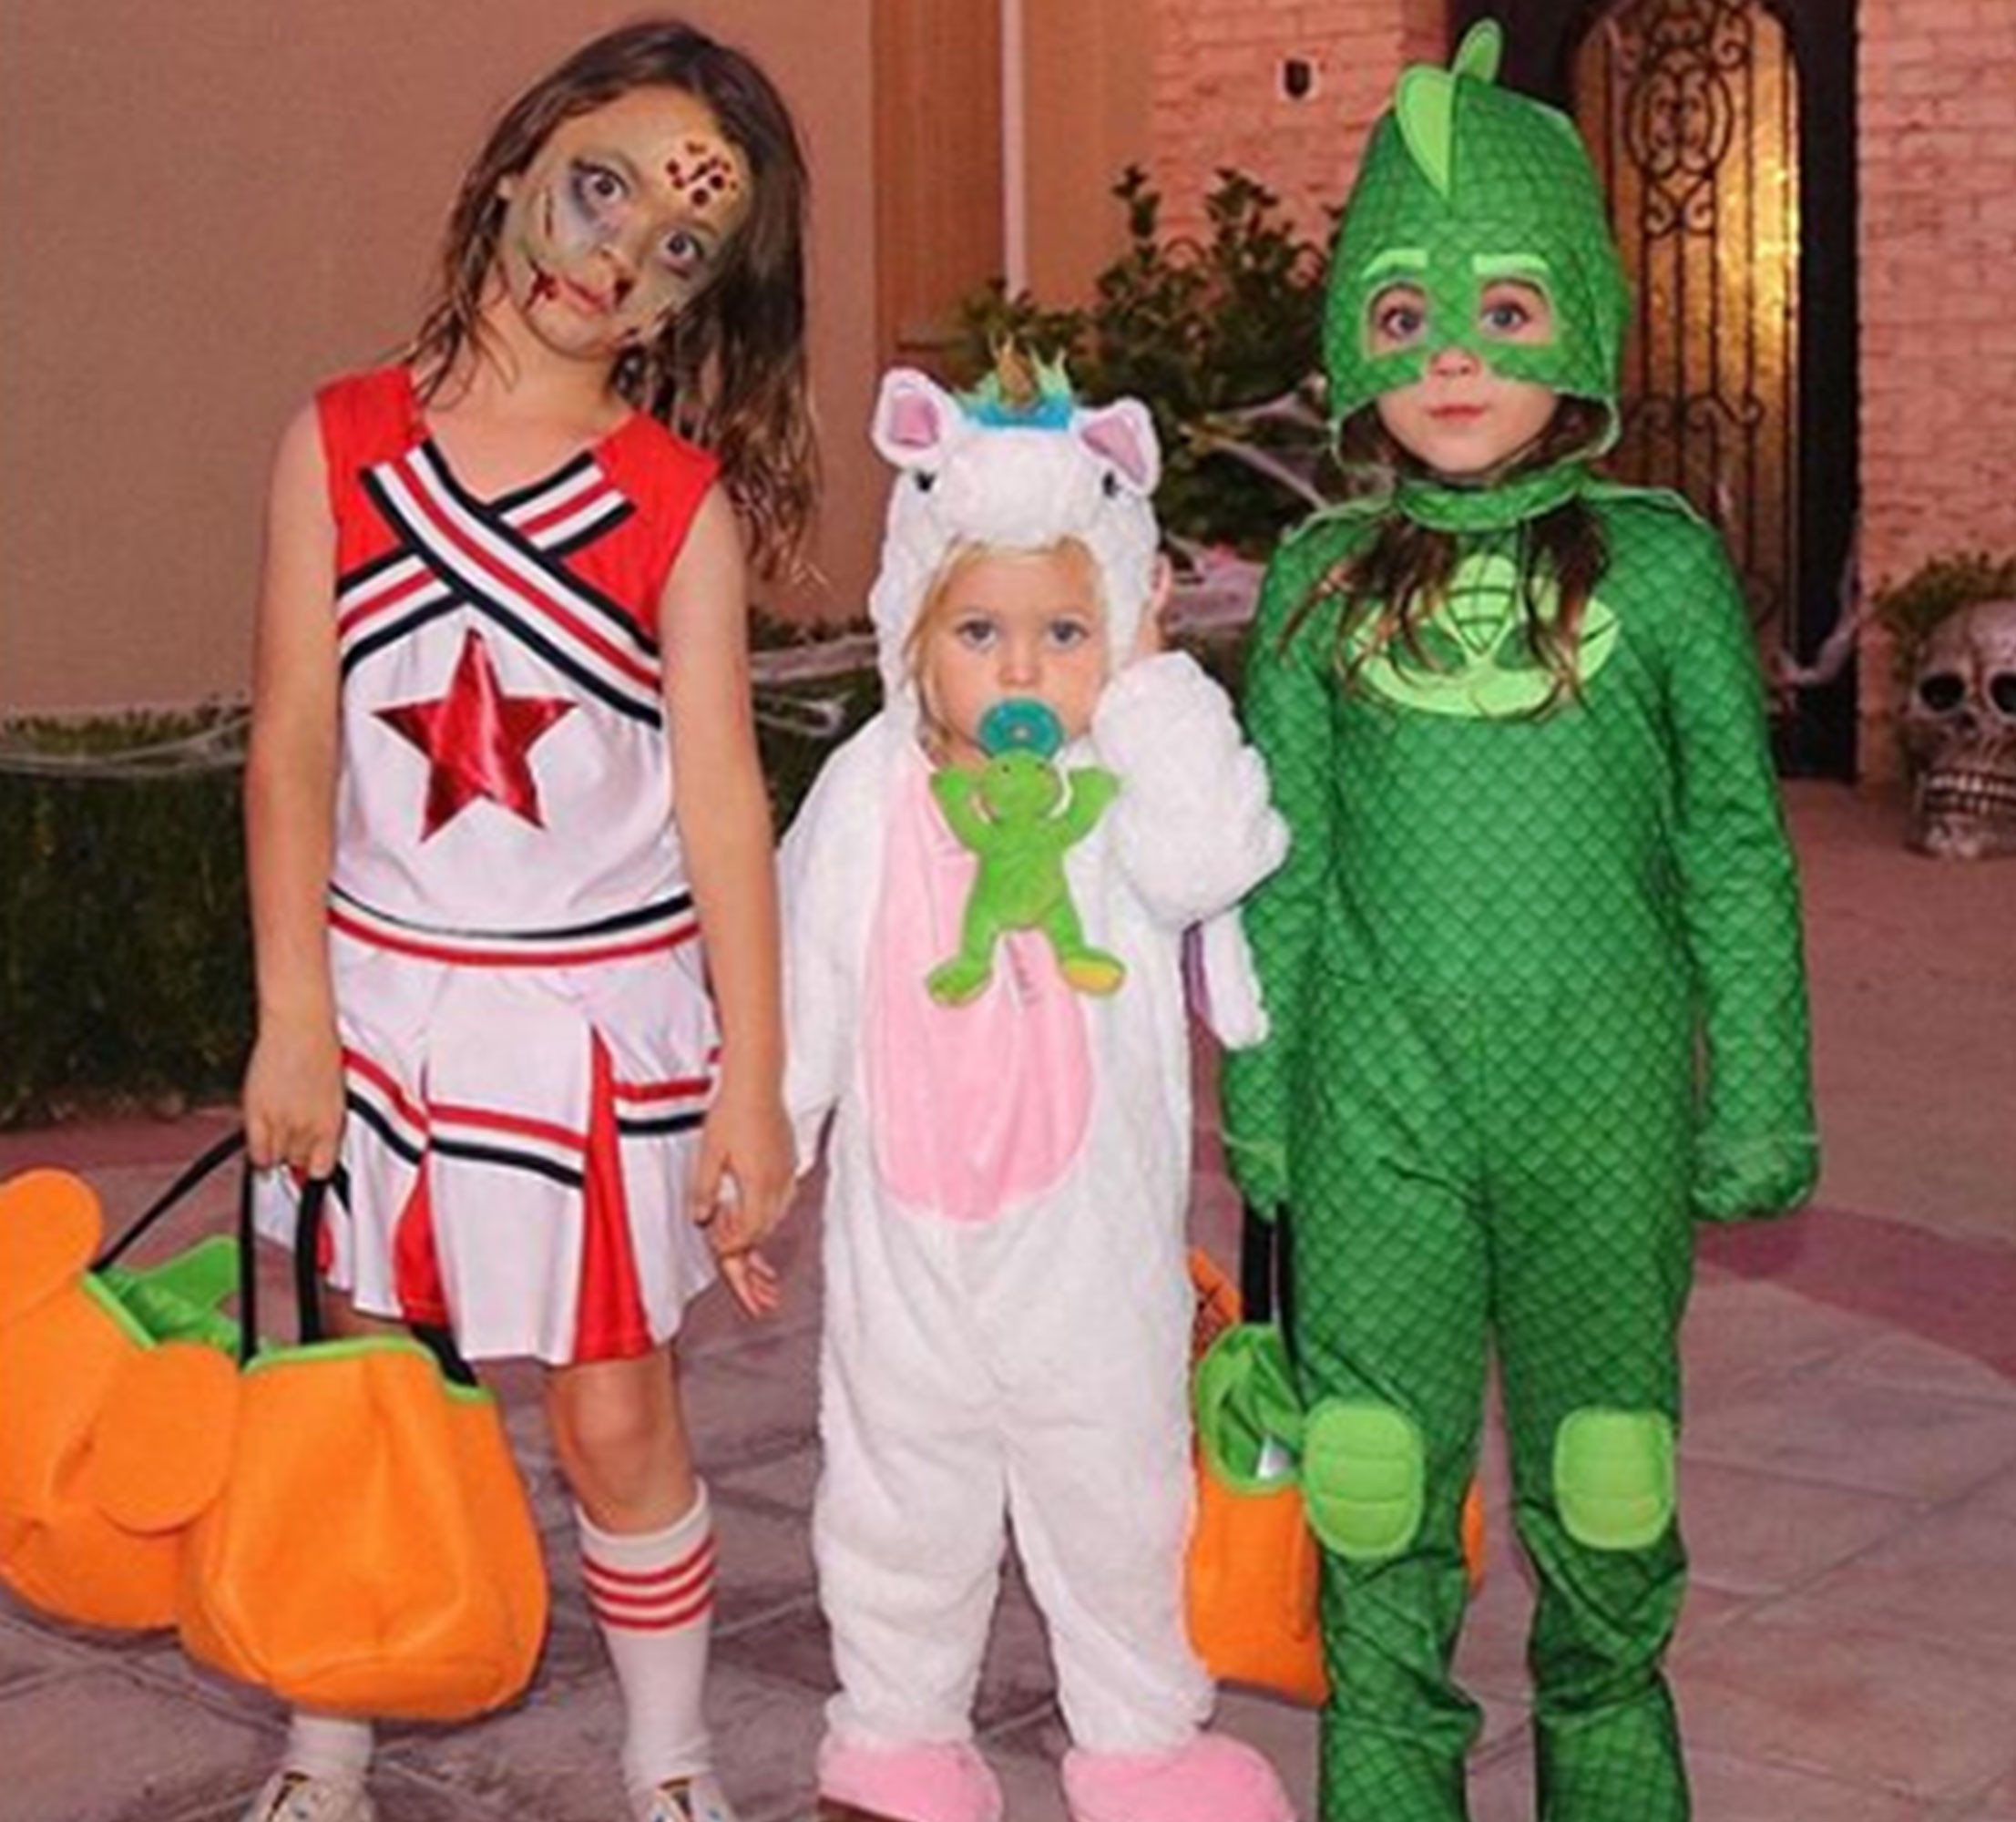 Os filhos de Megan Fox e Brian Austin Green (Noah está vestido de cheerleader zumbi) (Foto: Instagram)